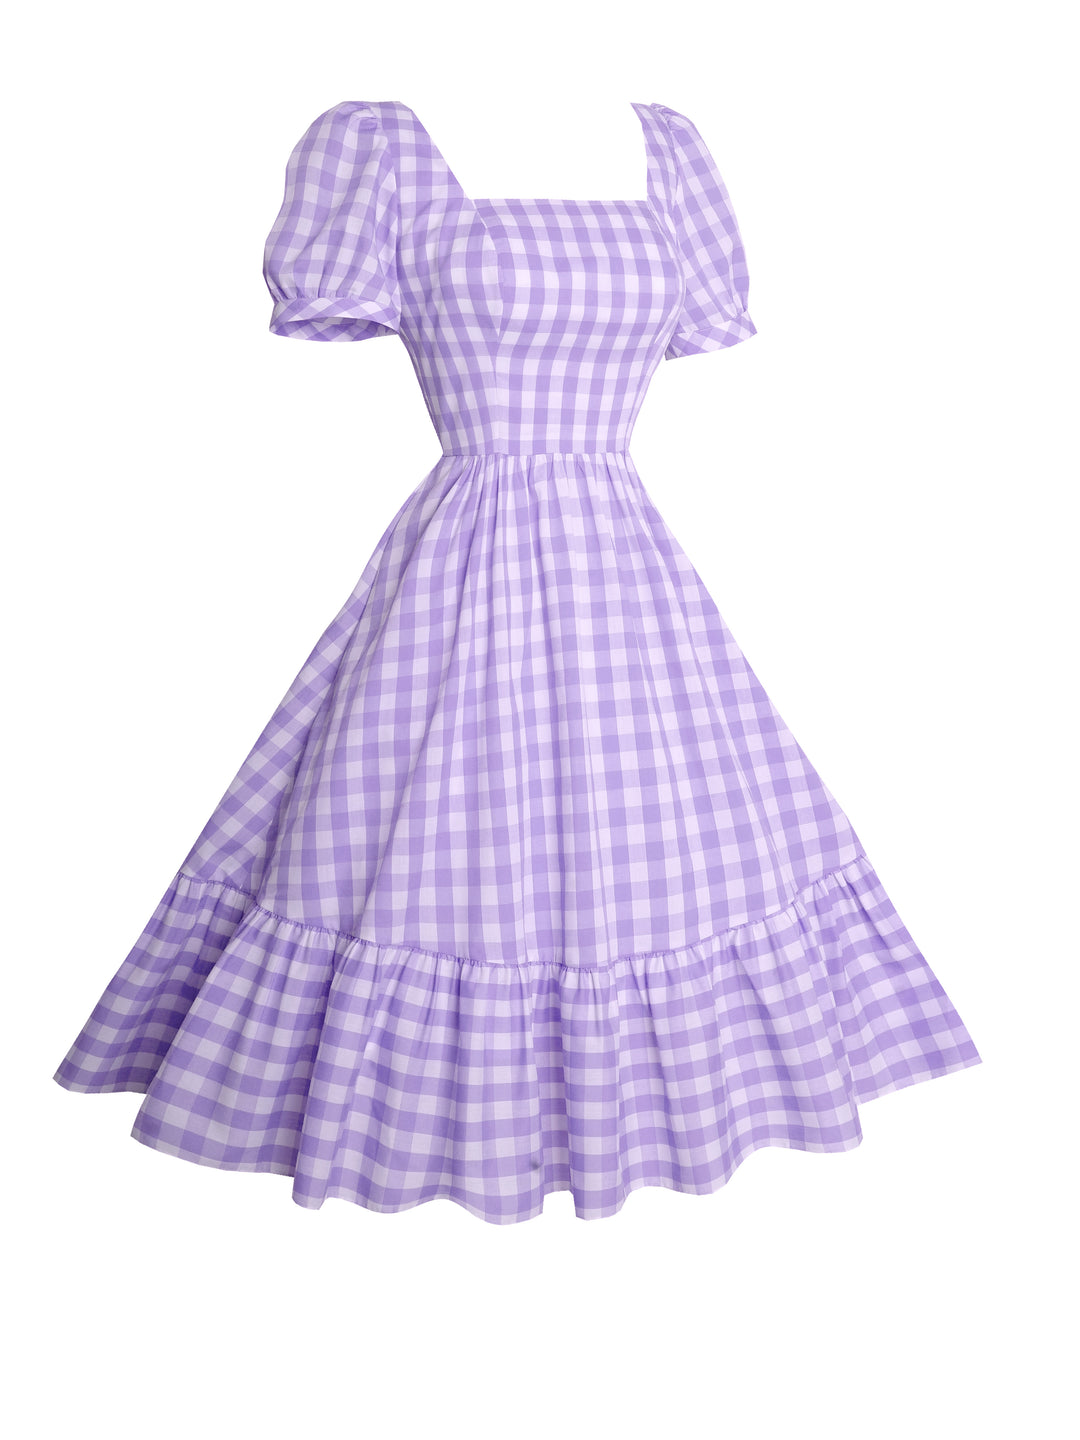 MTO - Isadora Dress Lavender Purple Gingham - Large Checks